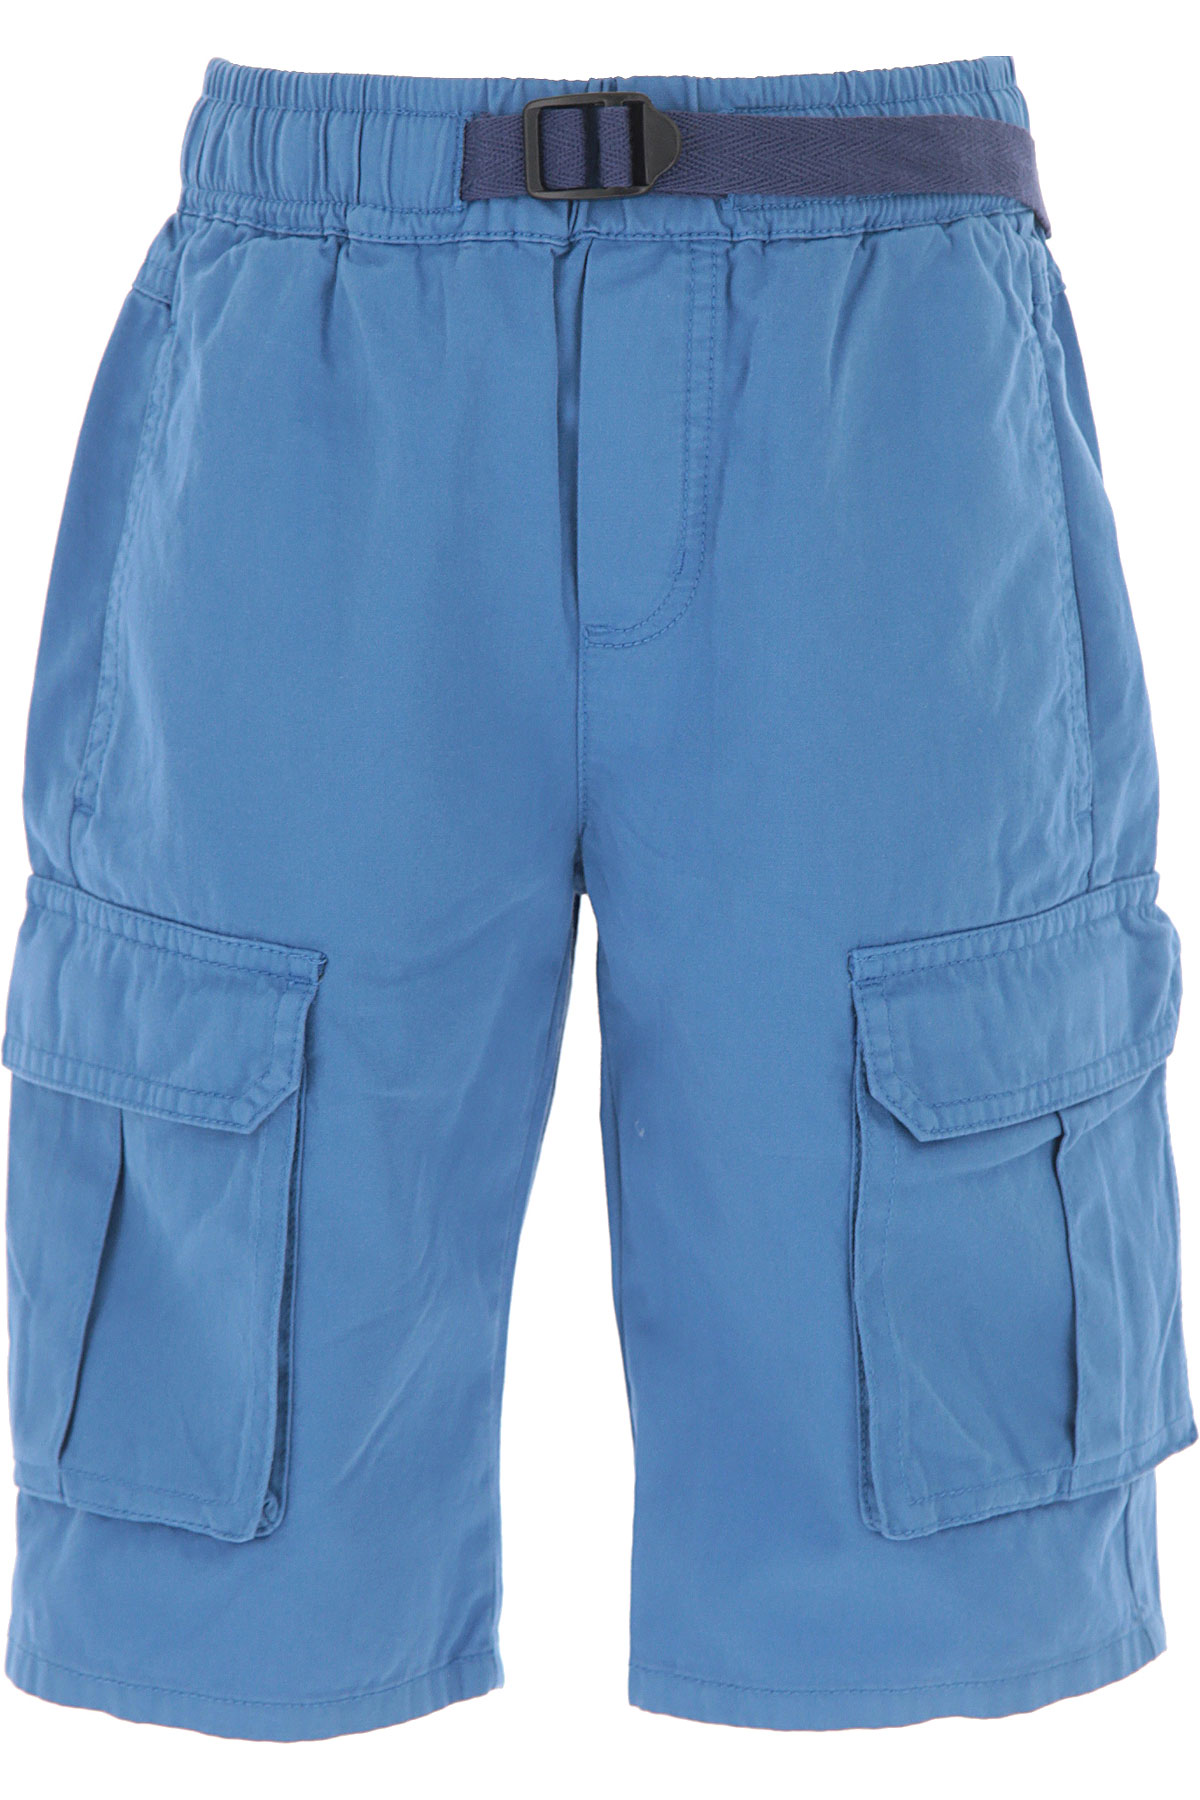 Kidswear Stella McCartney, Style code: 602328-sqk01-4001